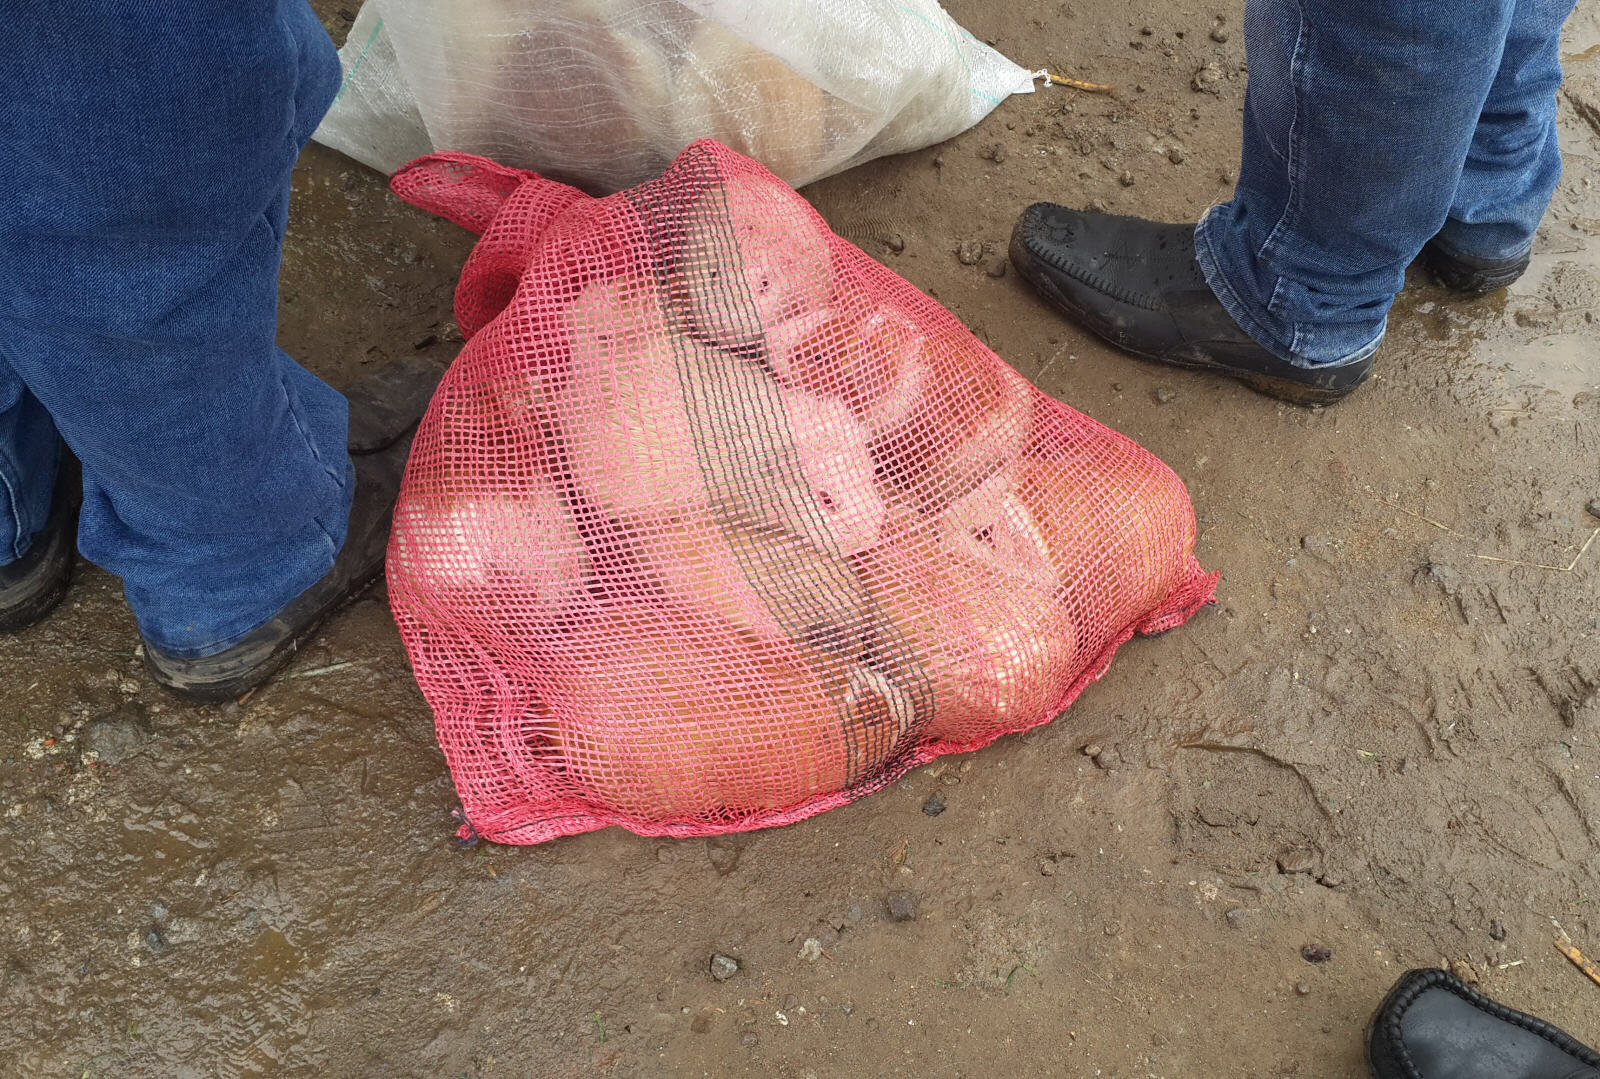 Guinea pigs in a bag in Otavalo animal market, Ecuador